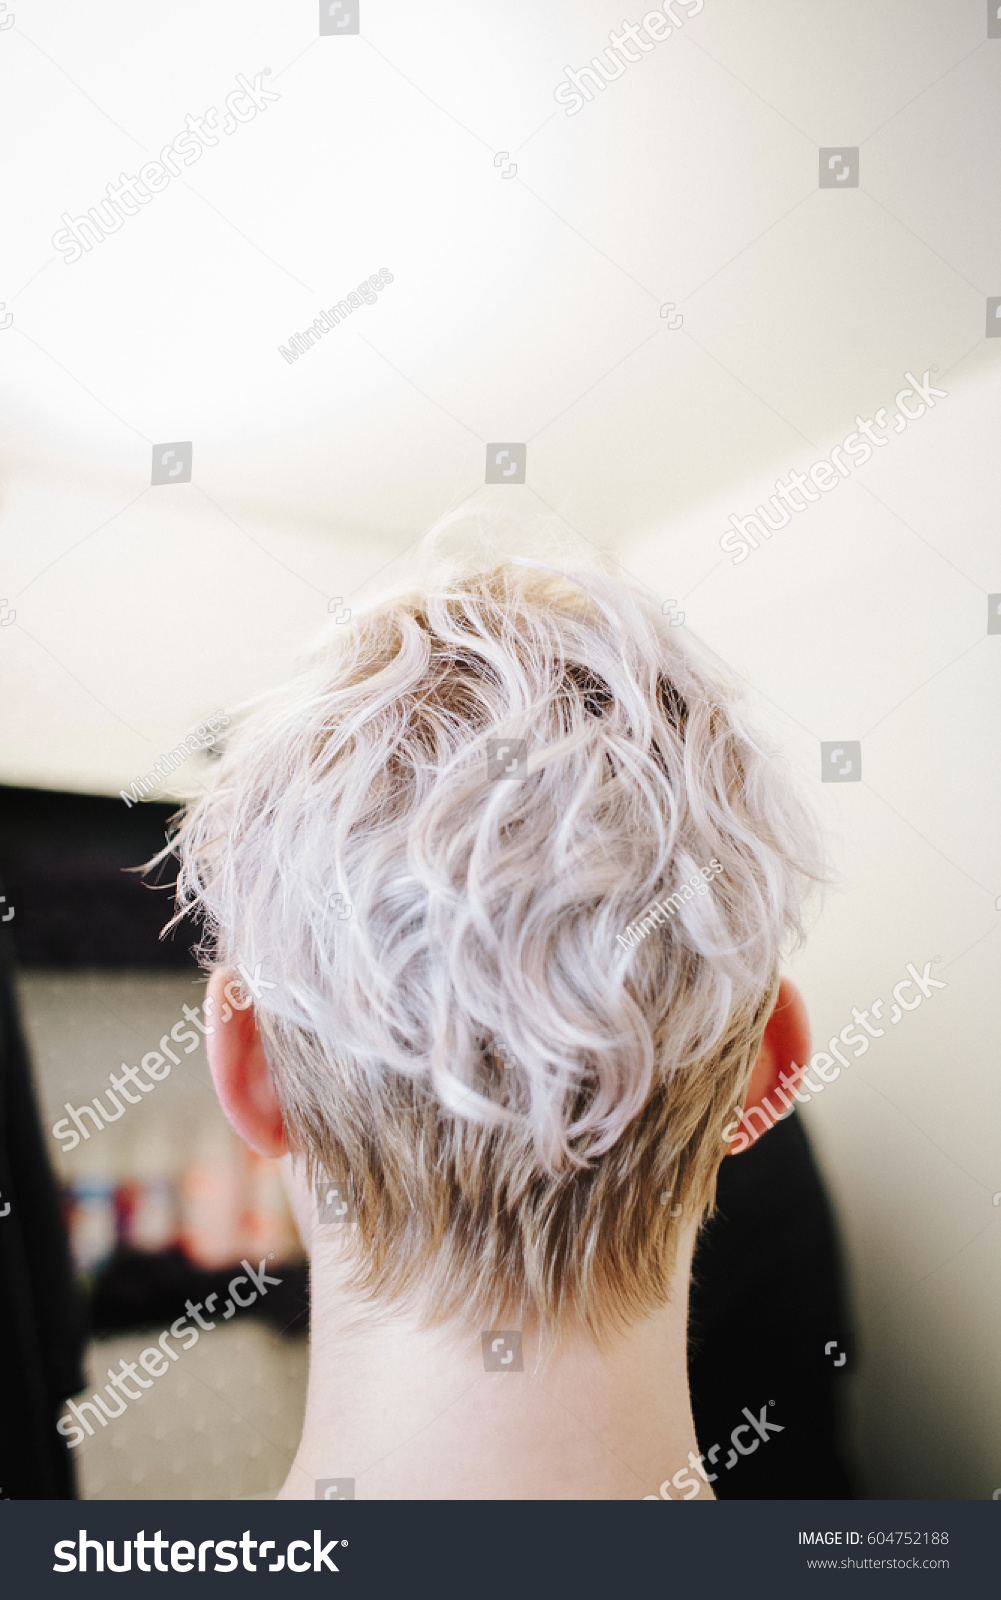 Woman Short Dyed Ash Blonde Hair Stock Photo Edit Now 604752188